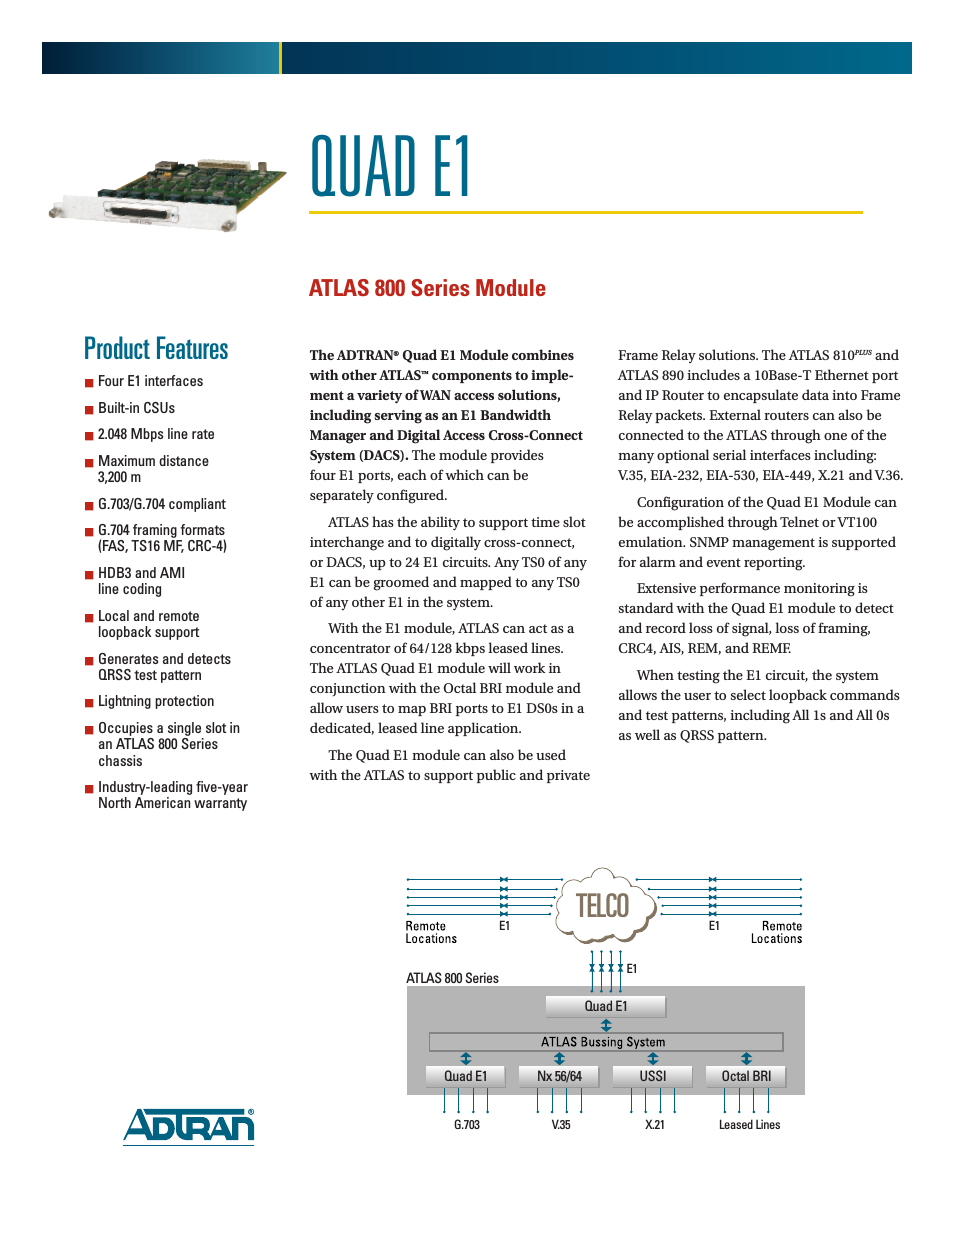 ATLAS 800 Series Module QUAD E1